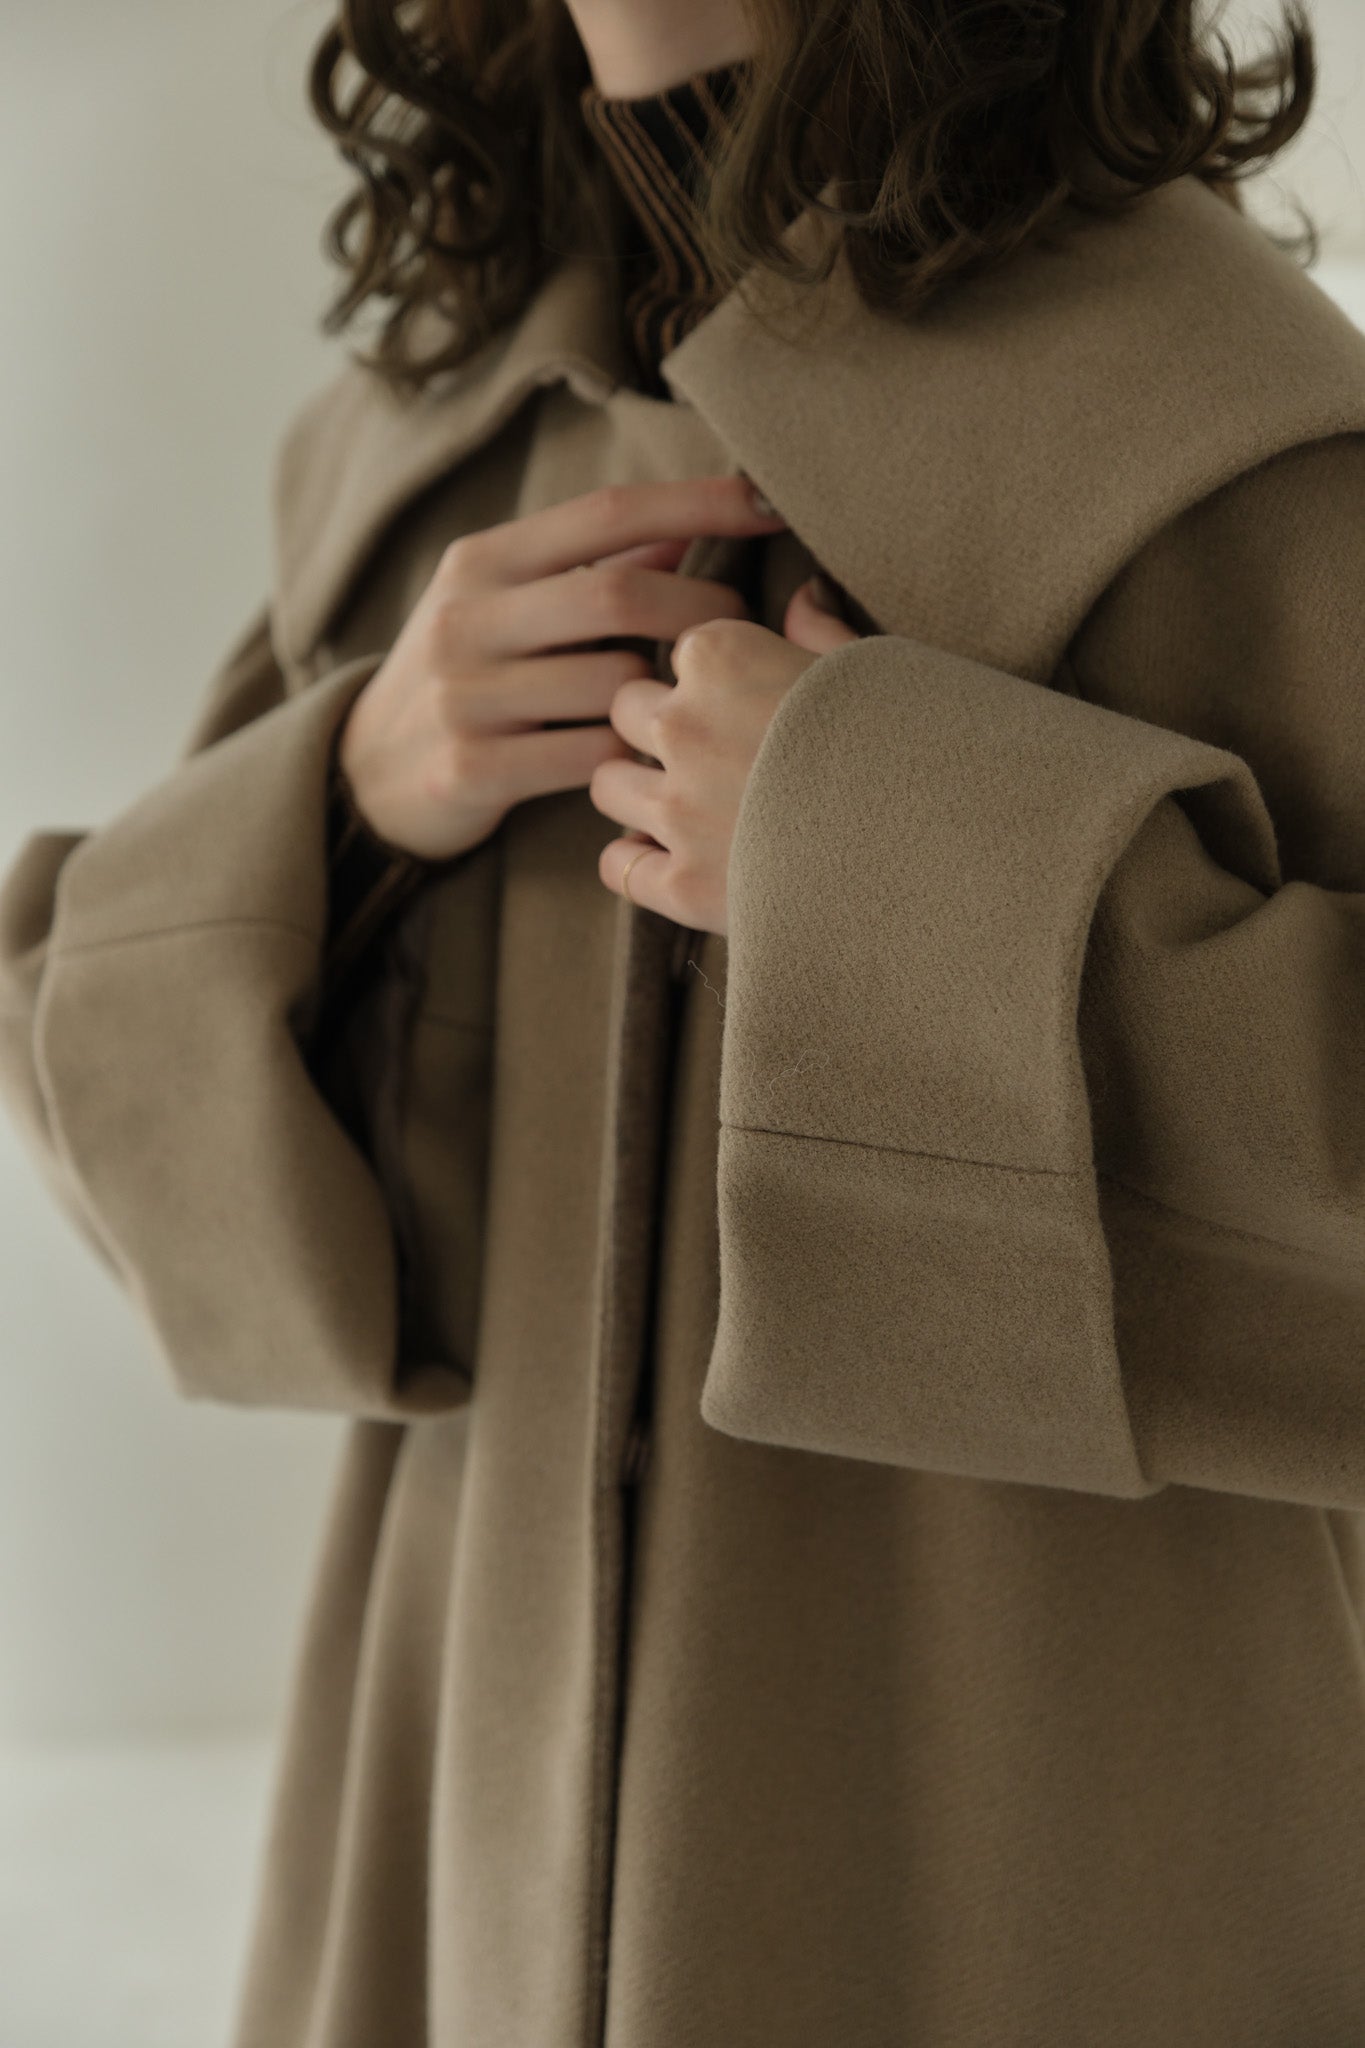 big collar middle coat – Eaphi